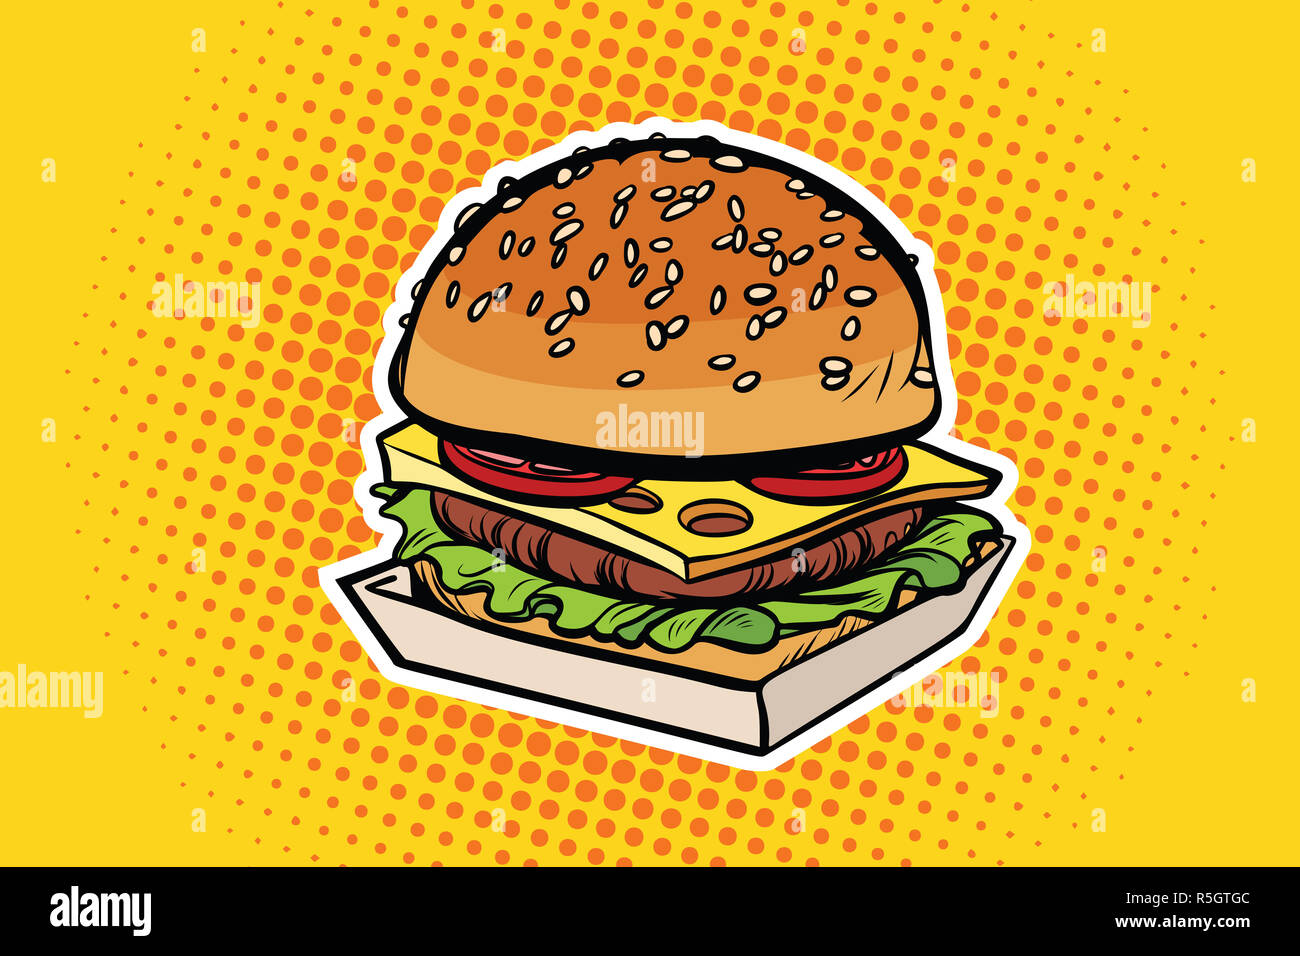 Burger pop art illustration Stock Photo - Alamy